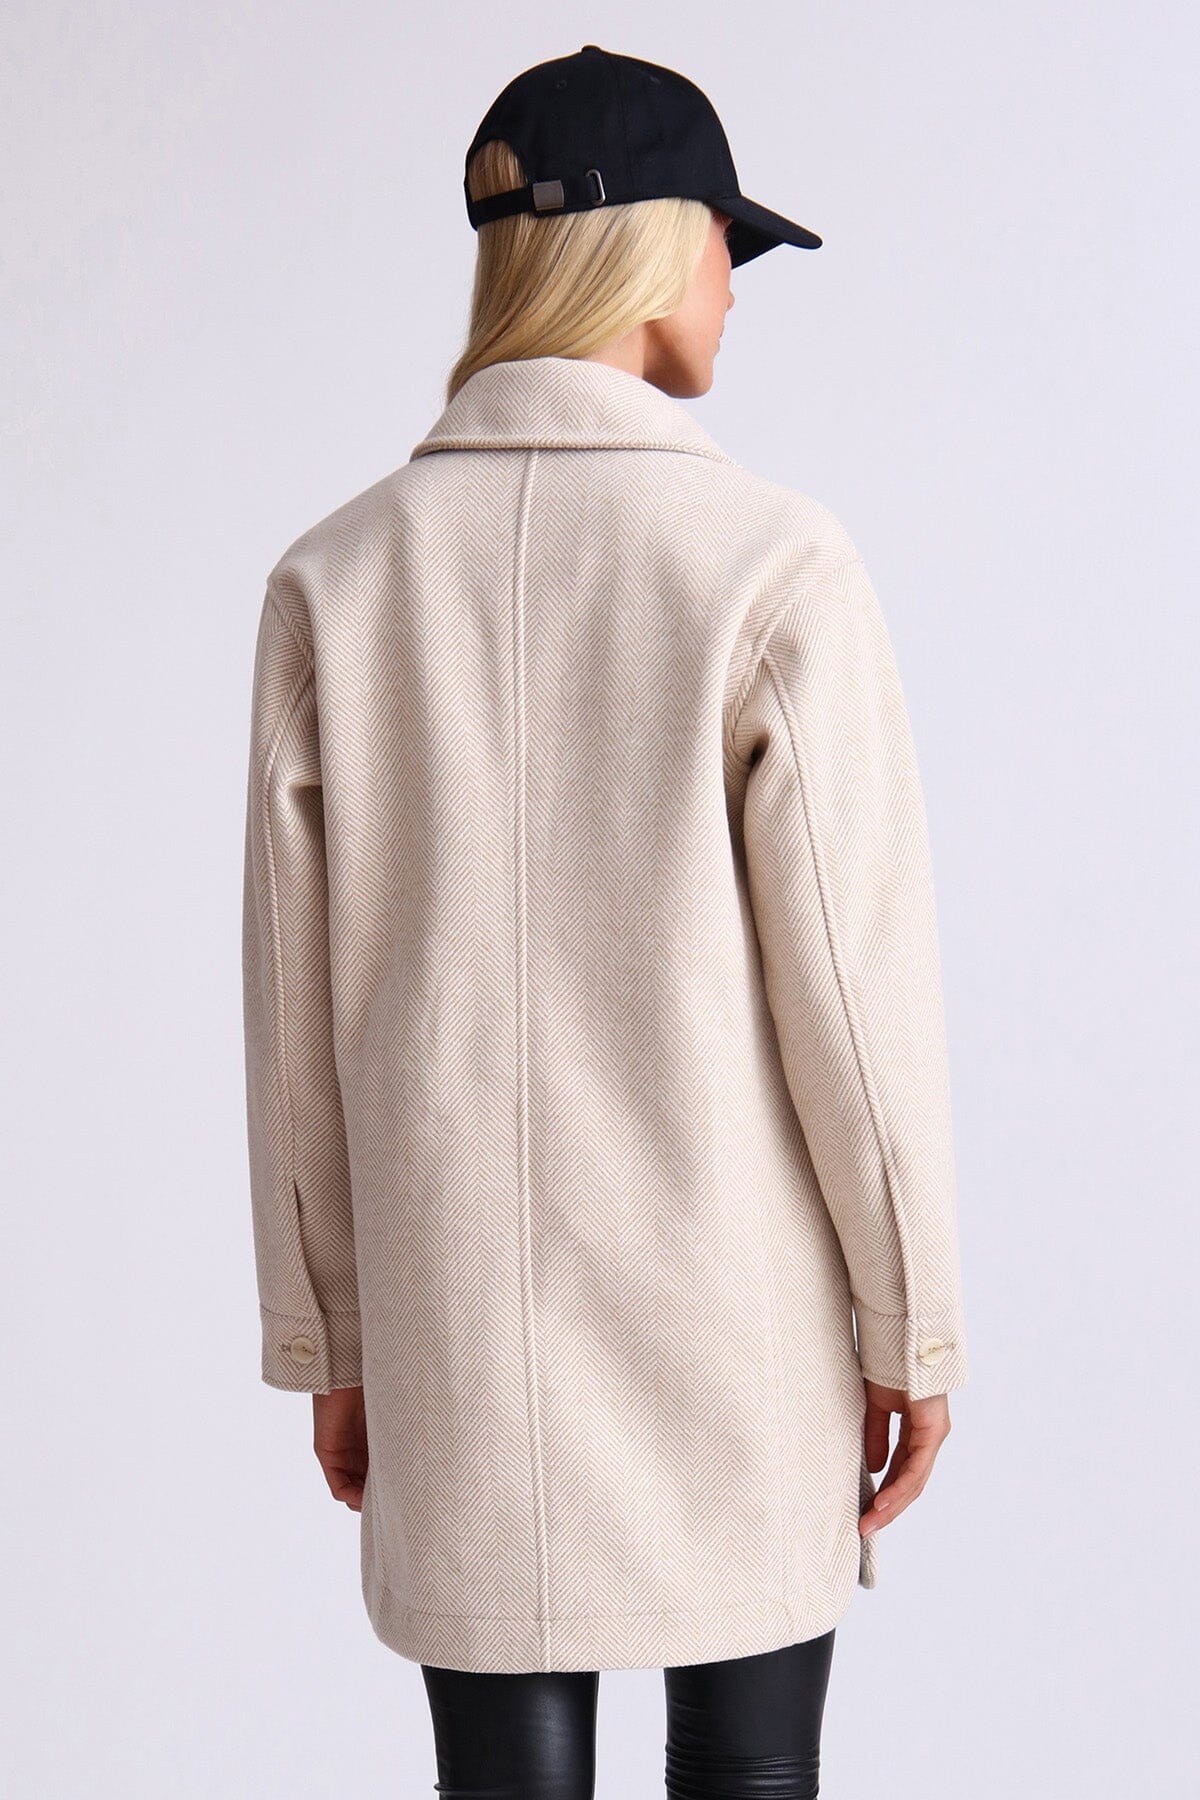 Camel cream off white longline herringbone shacket jacket coat - women's figure flattering shackets jackets coats for fall 2023